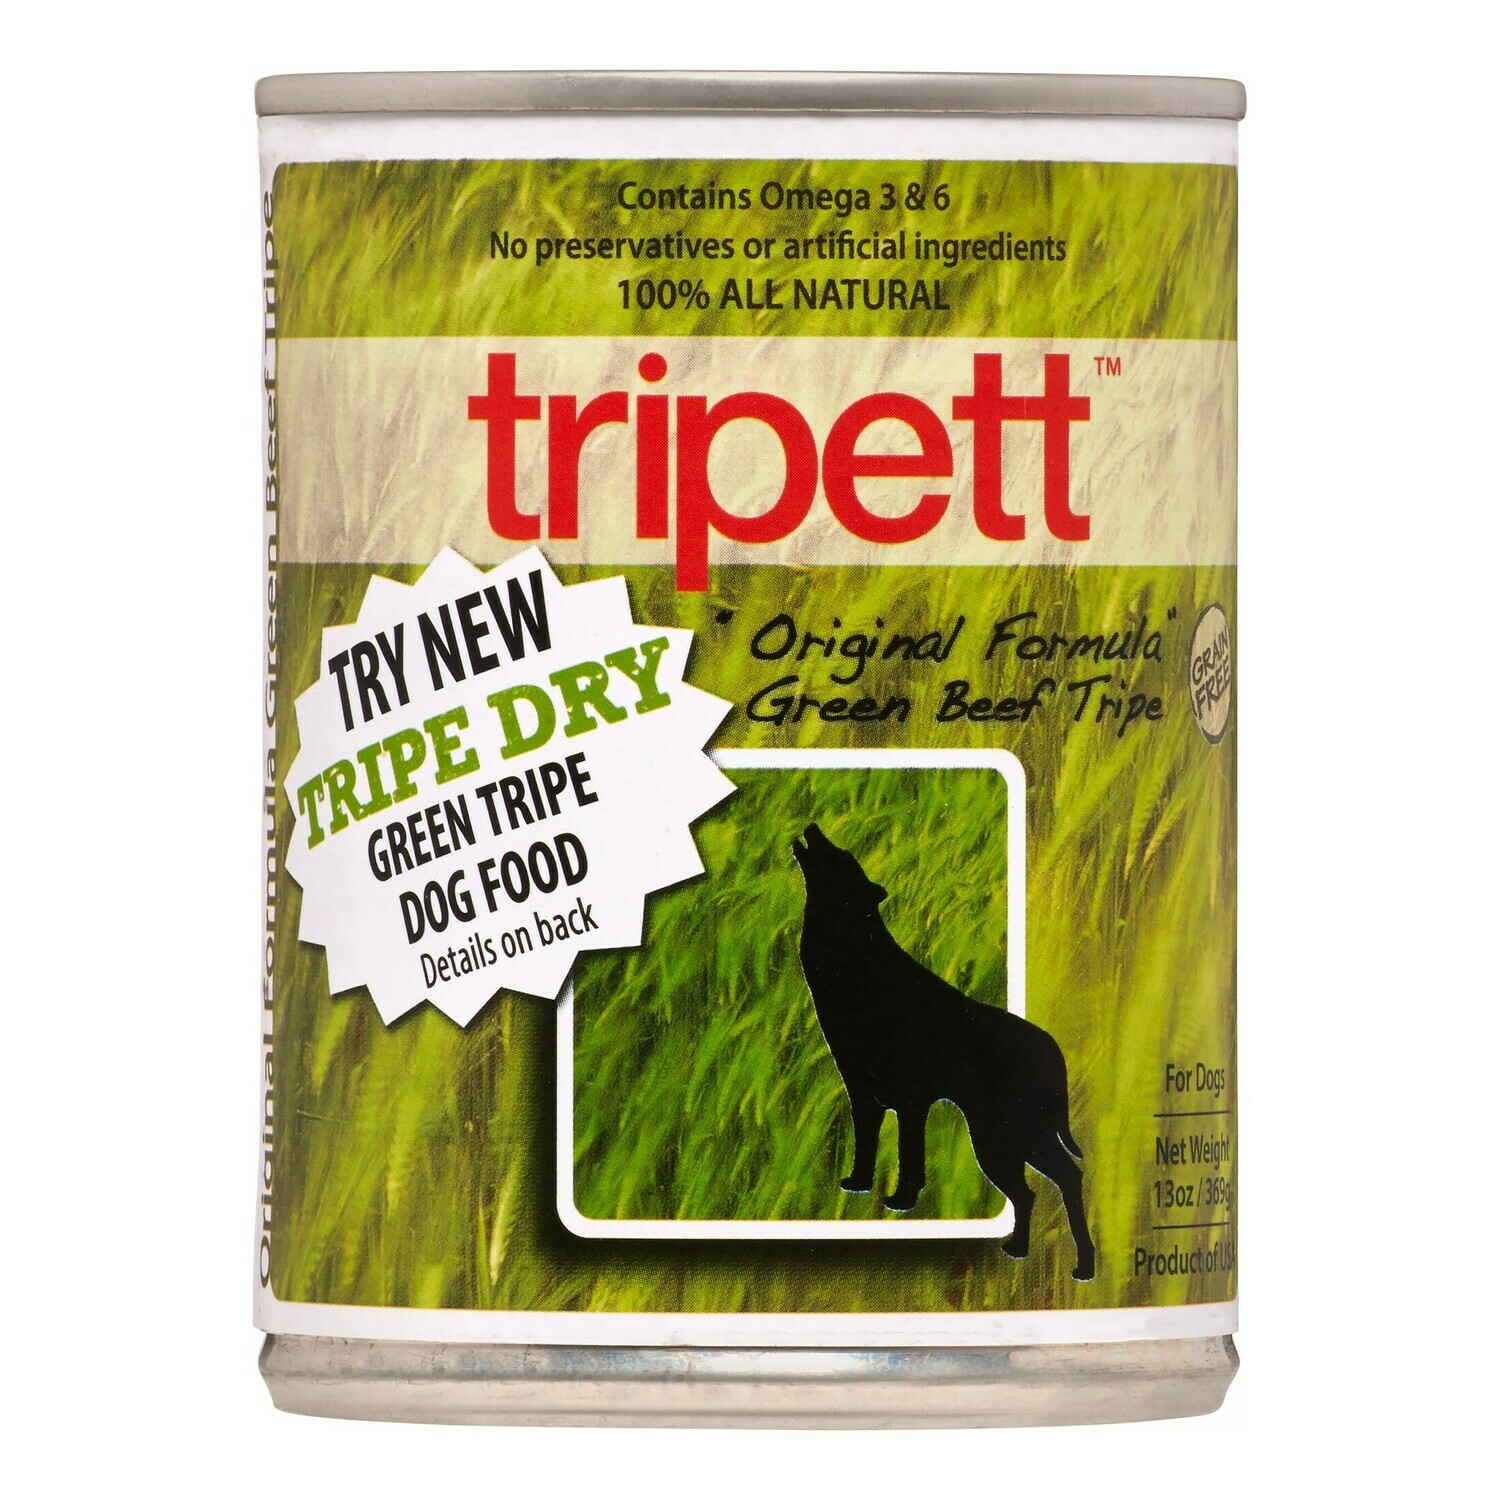 PetKind Tripett Original Formula Green Beef Tripe Grain-Free Canned Dog Food, 13-oz